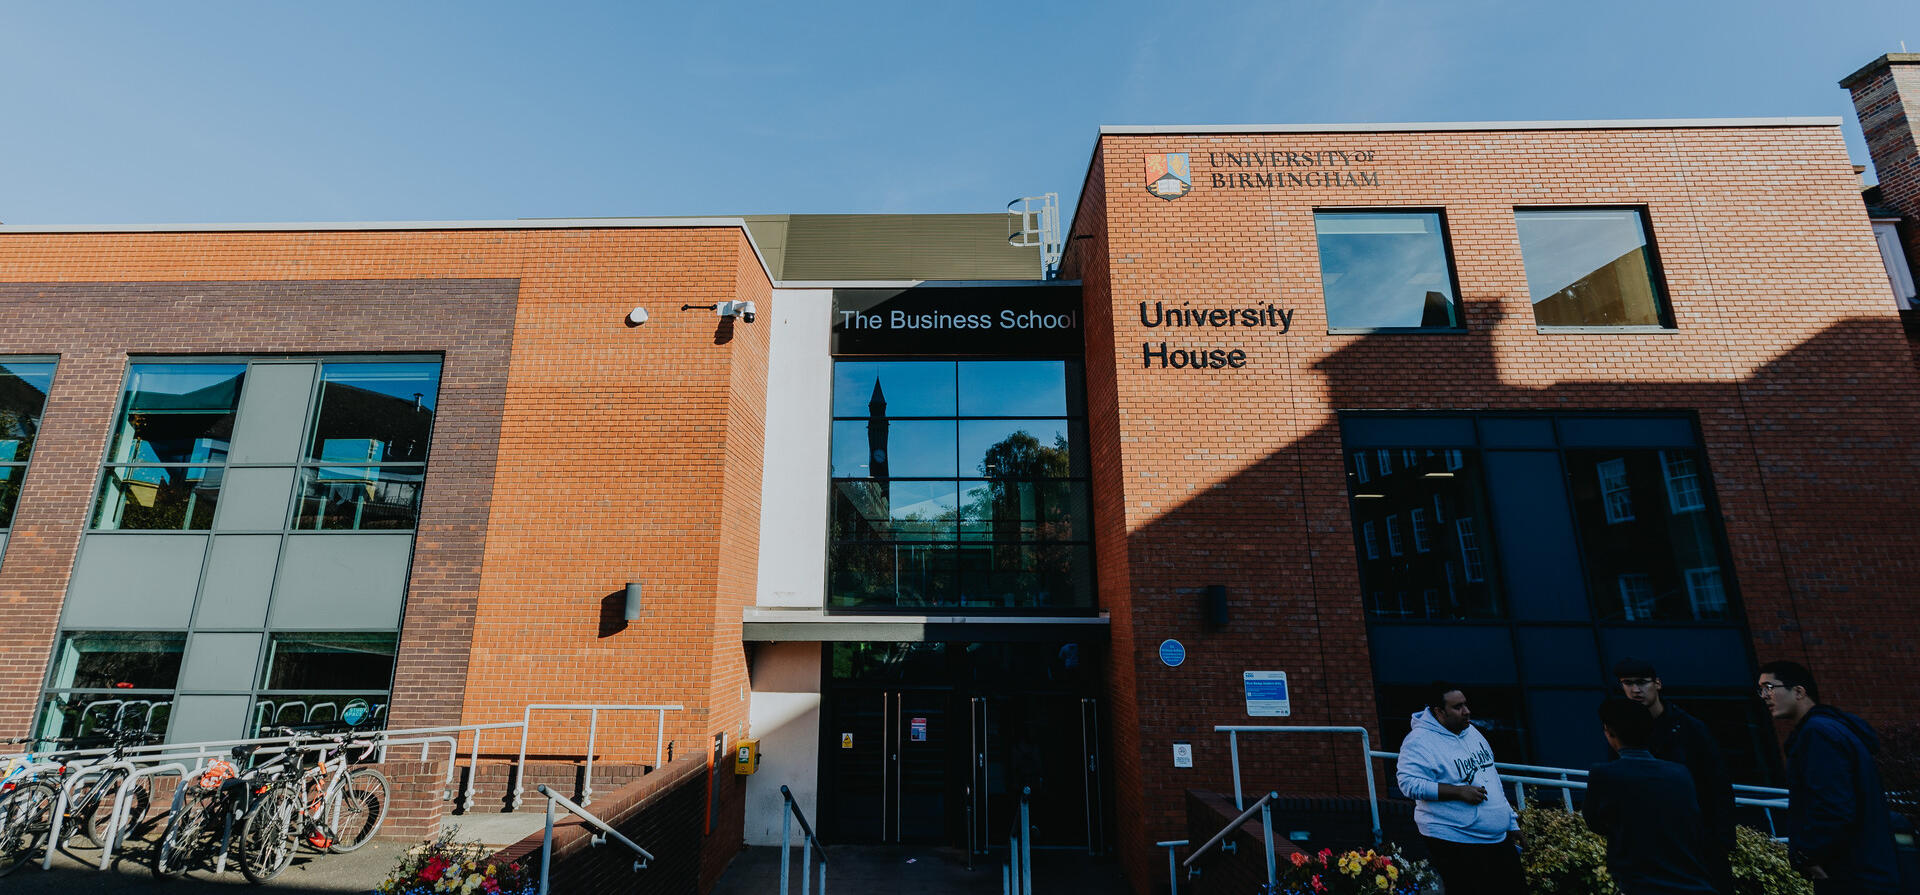 The front of Birmingham Business School (University House)